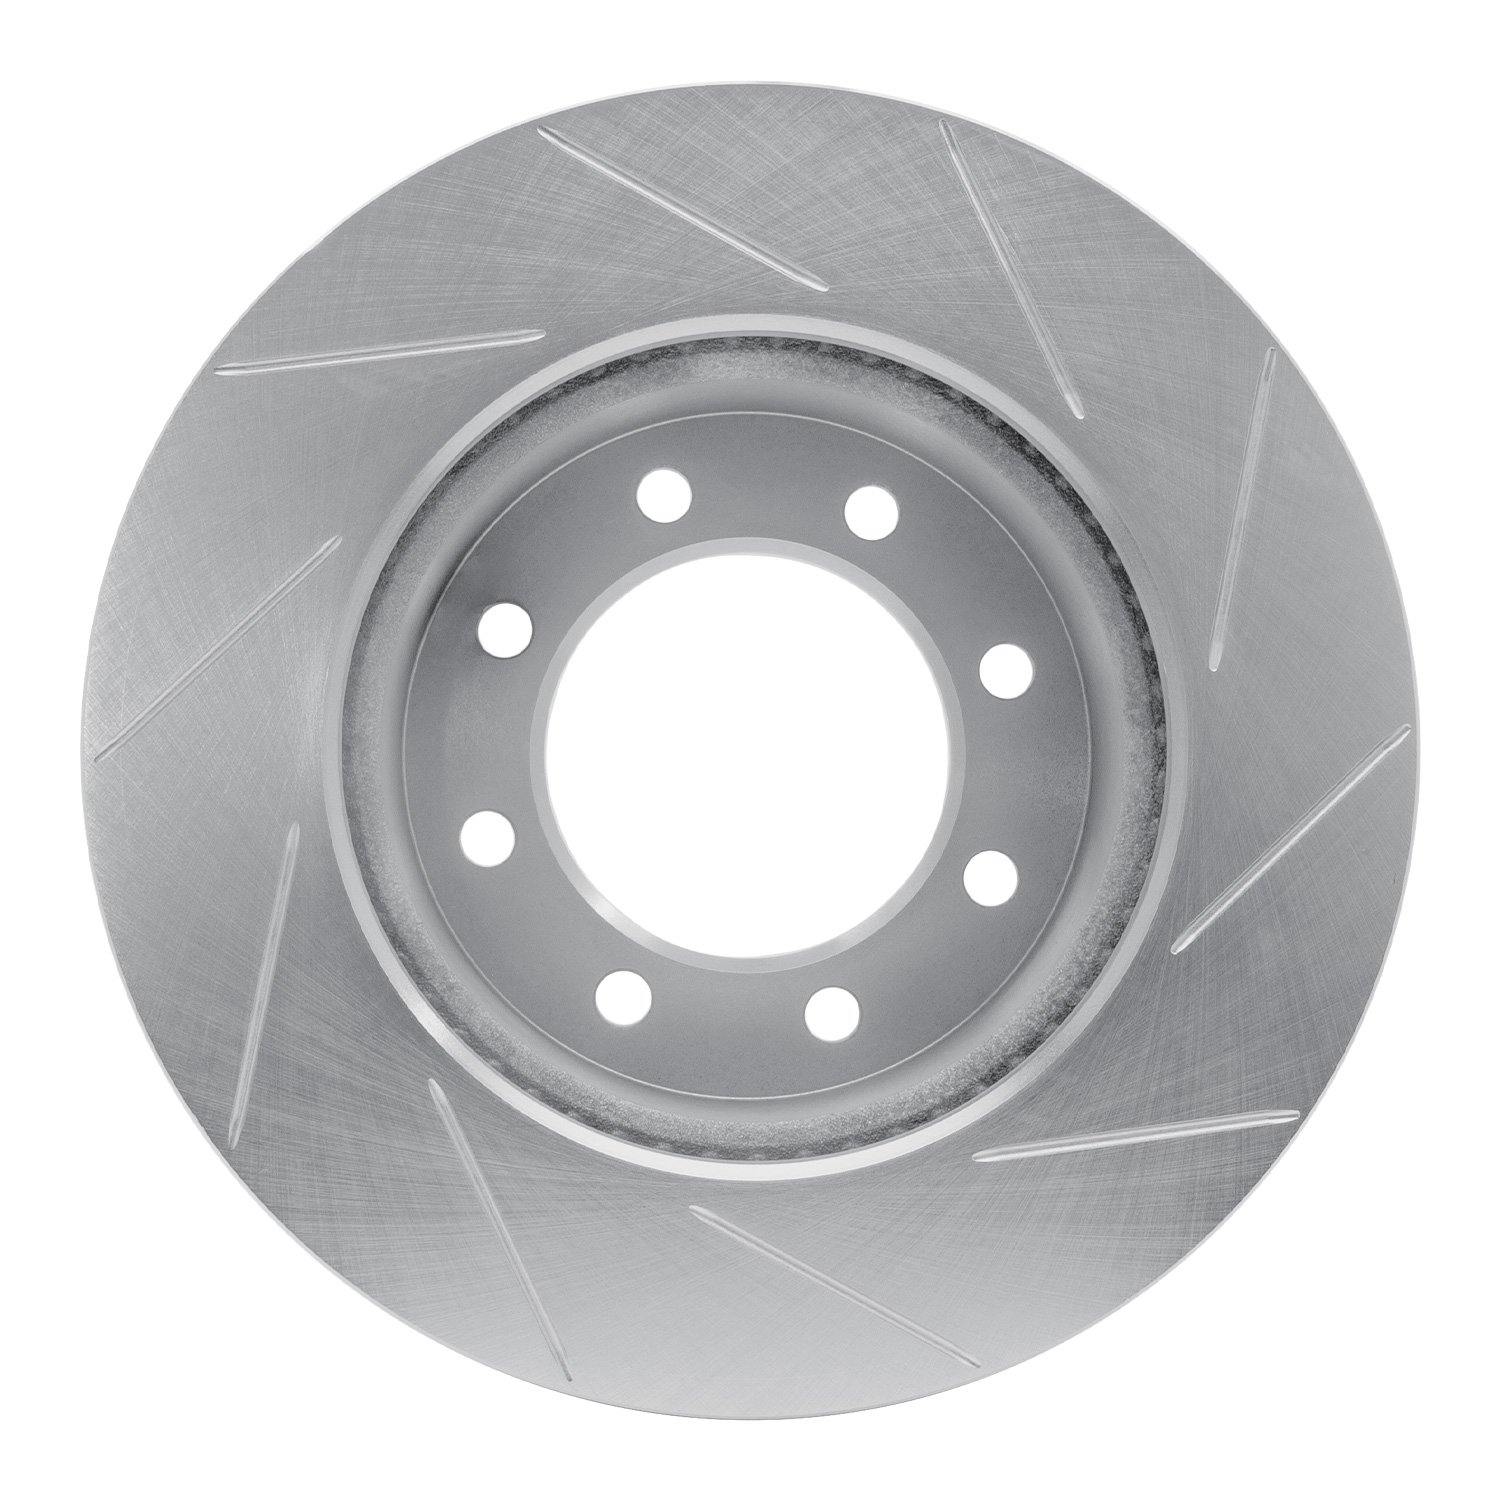 Slotted Brake Rotor [Silver], Fits Select Mopar